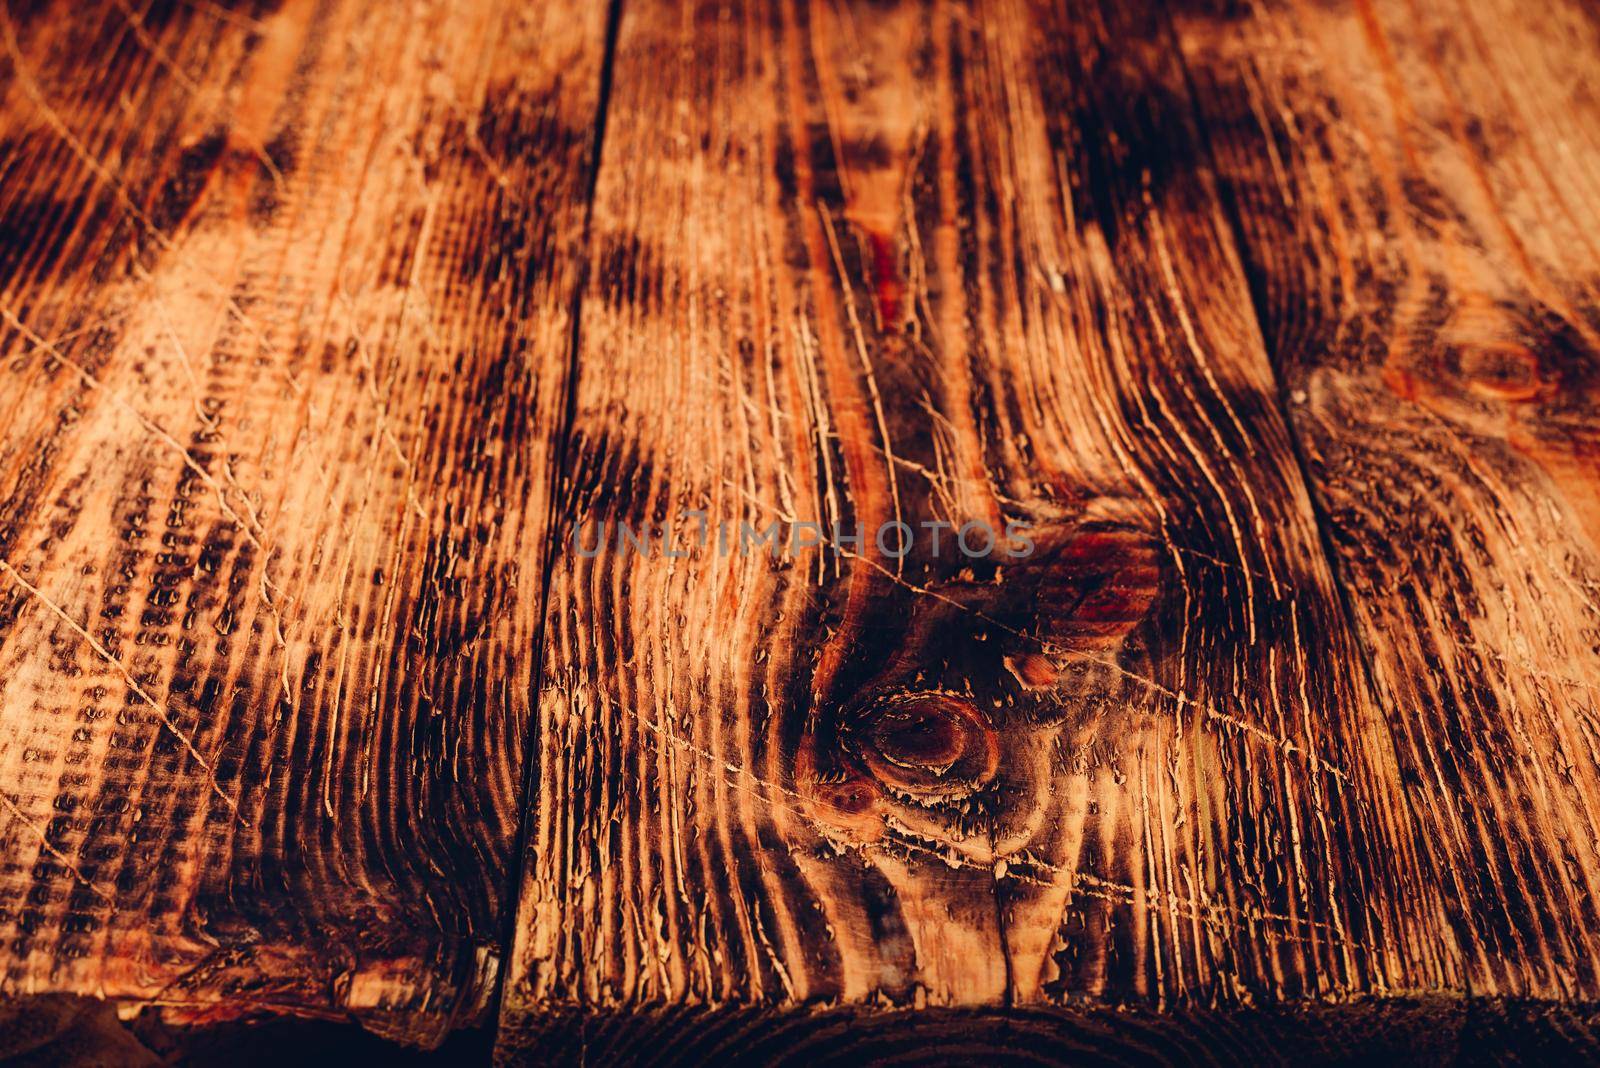 Old wooden surface by Seva_blsv